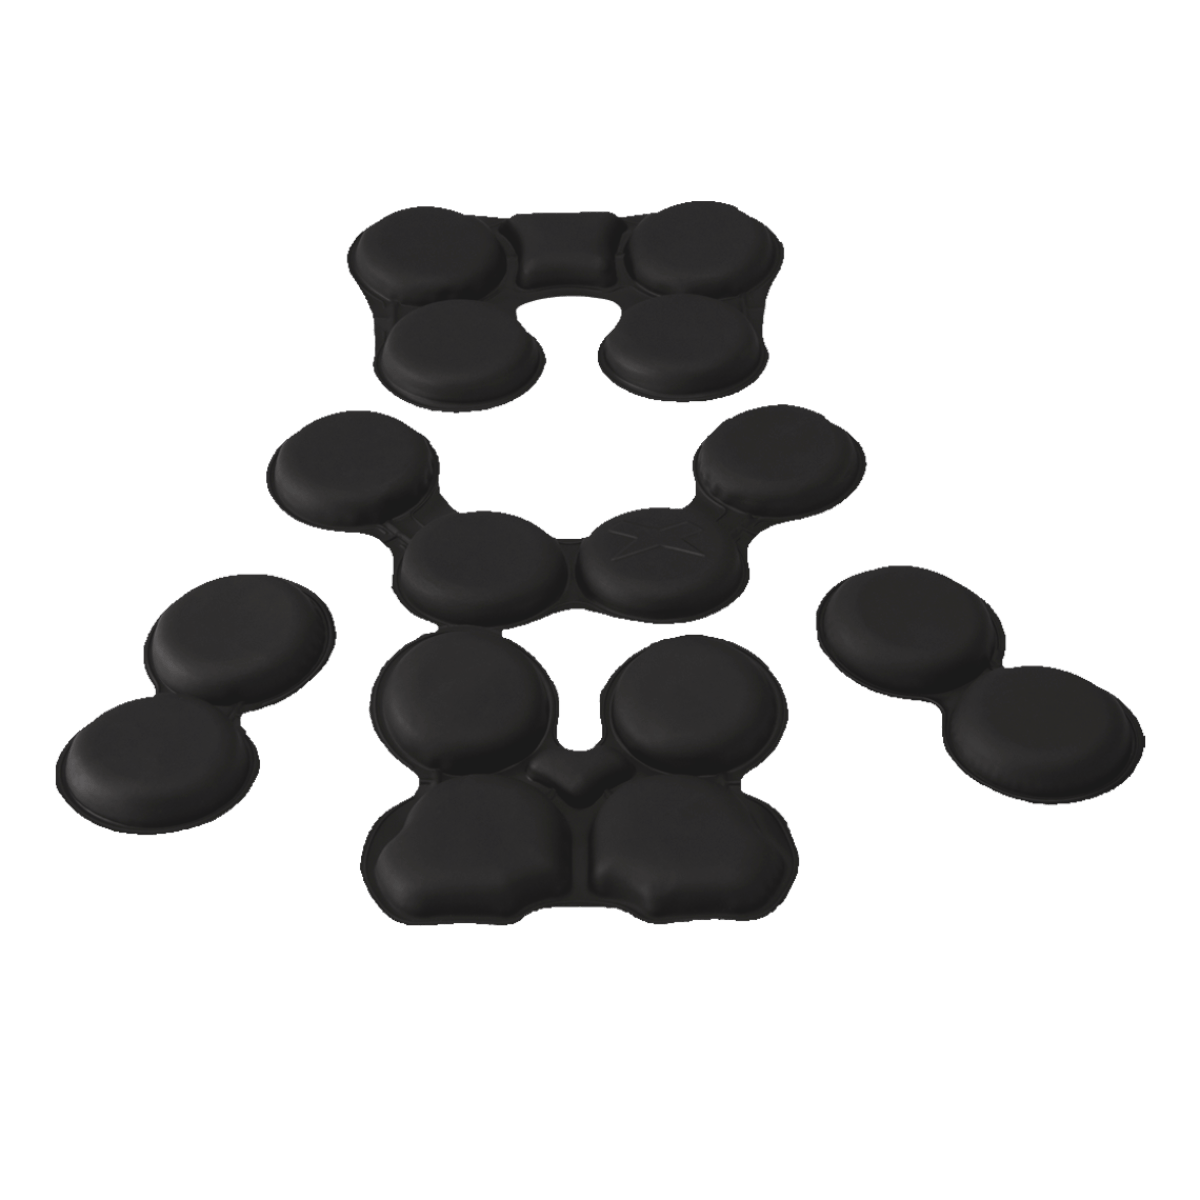 Black X2E + / X2E comfort pads for football helmets.